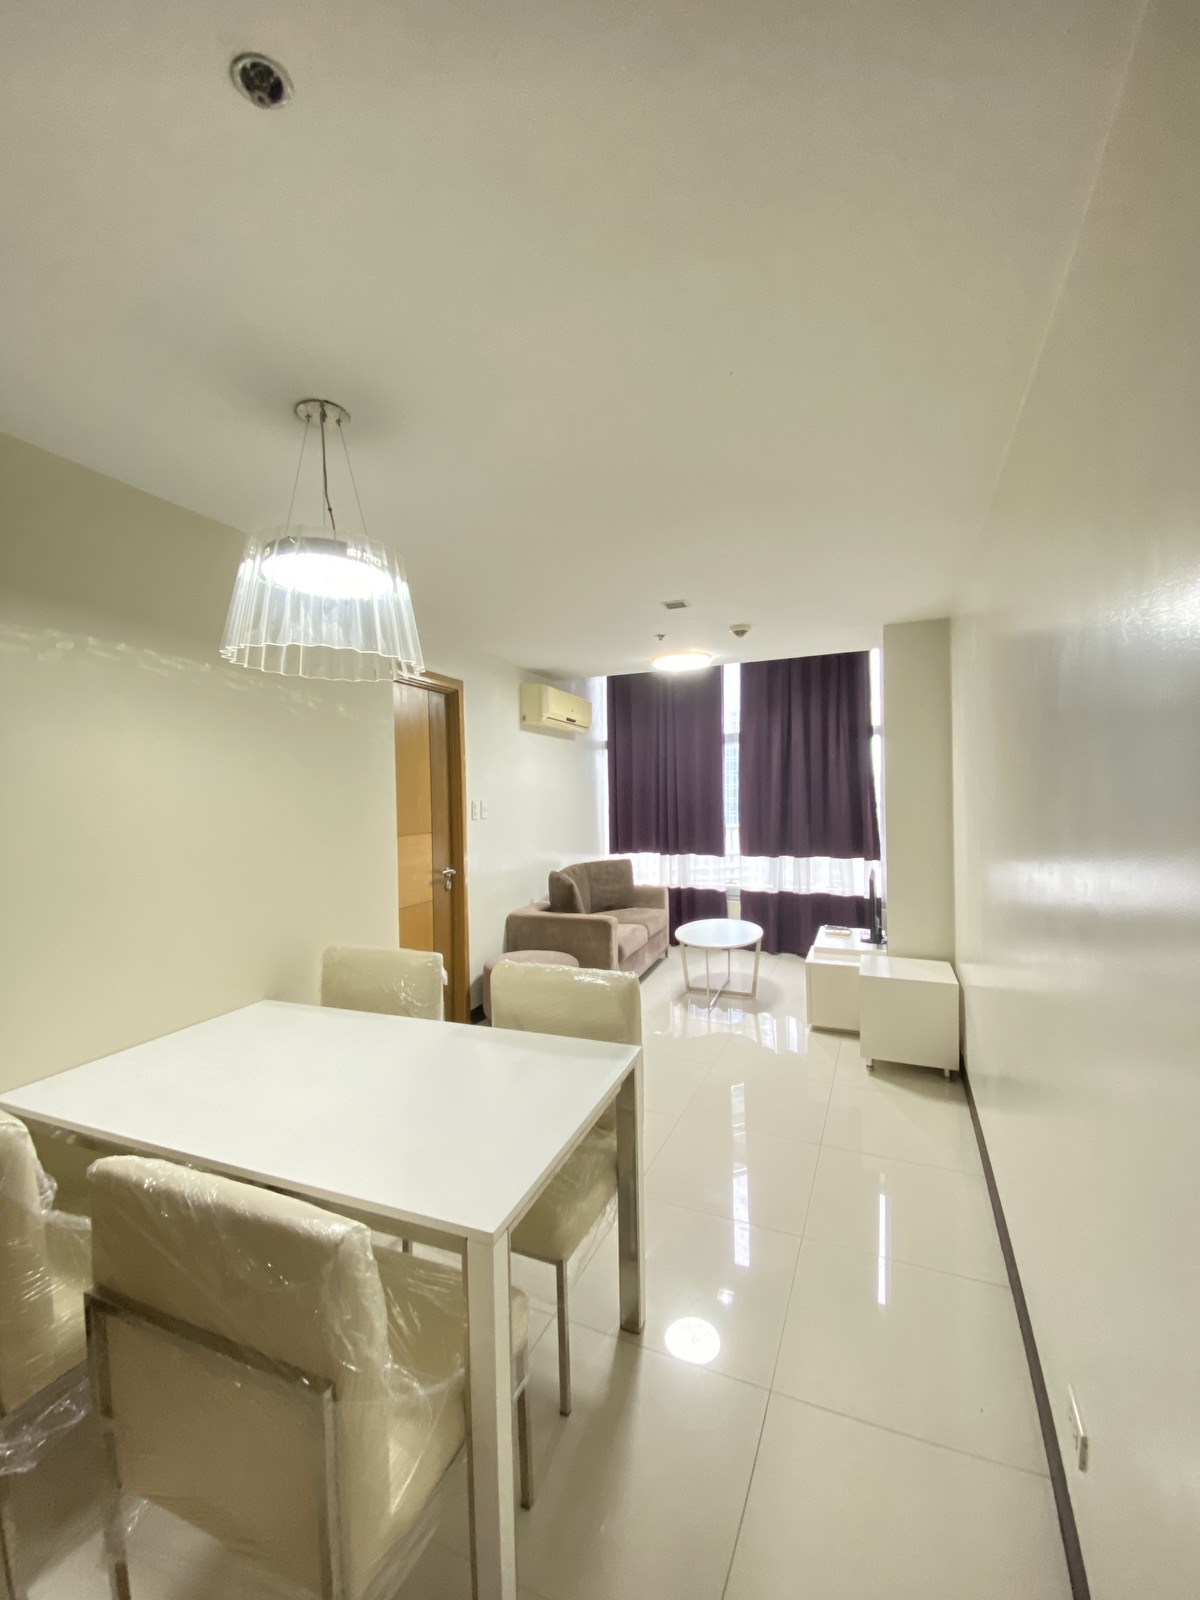 1 Bedroom for Rent in Makati